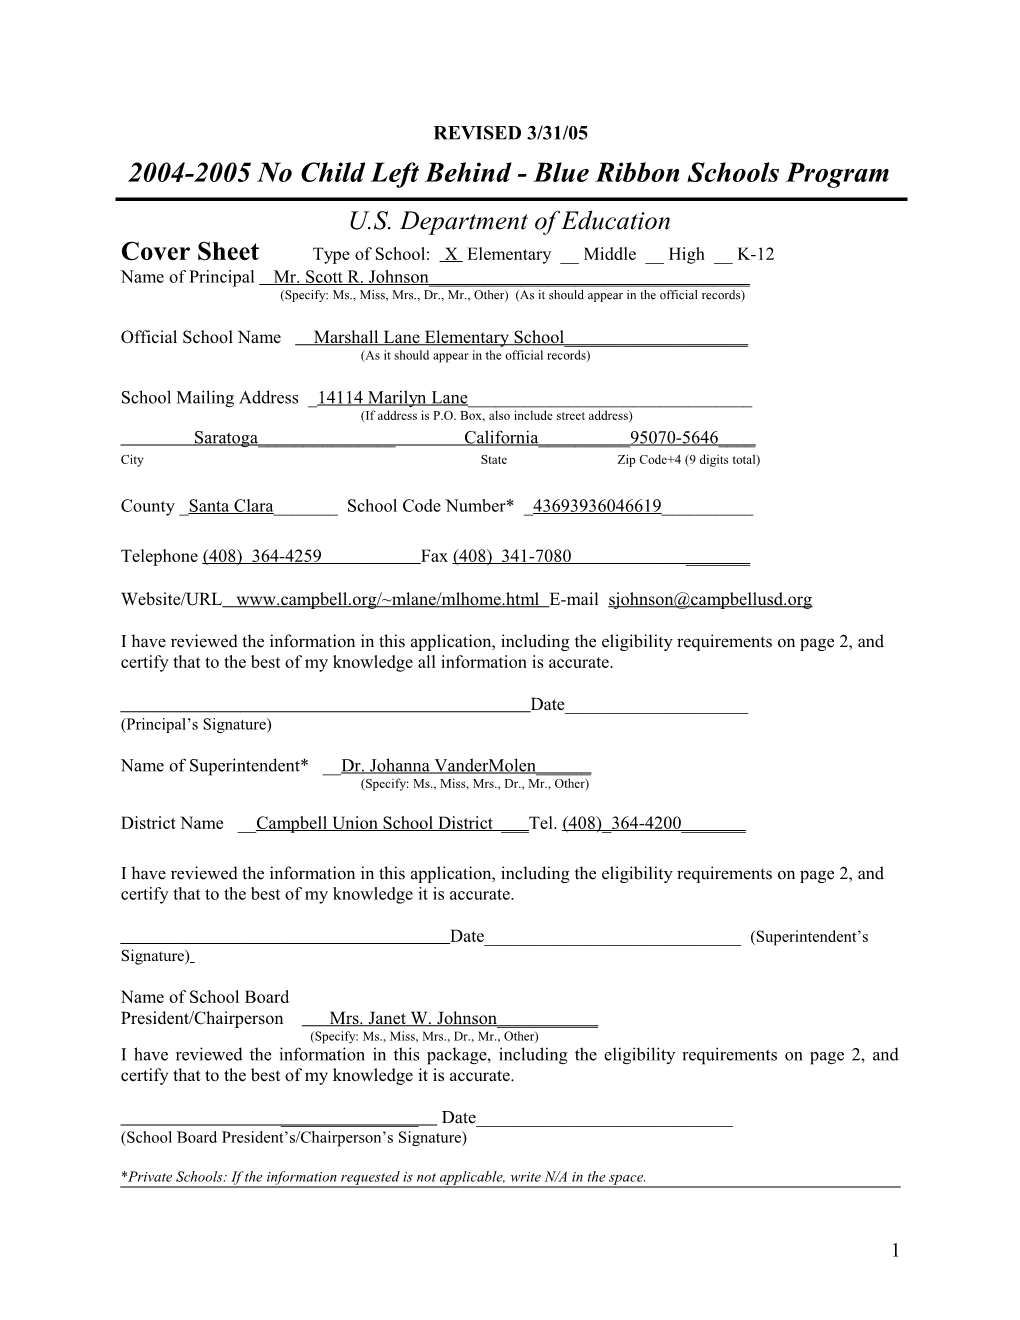 Marshall Lane Elementary School Application: 2004-2005, No Child Left Behind - Blue Ribbon